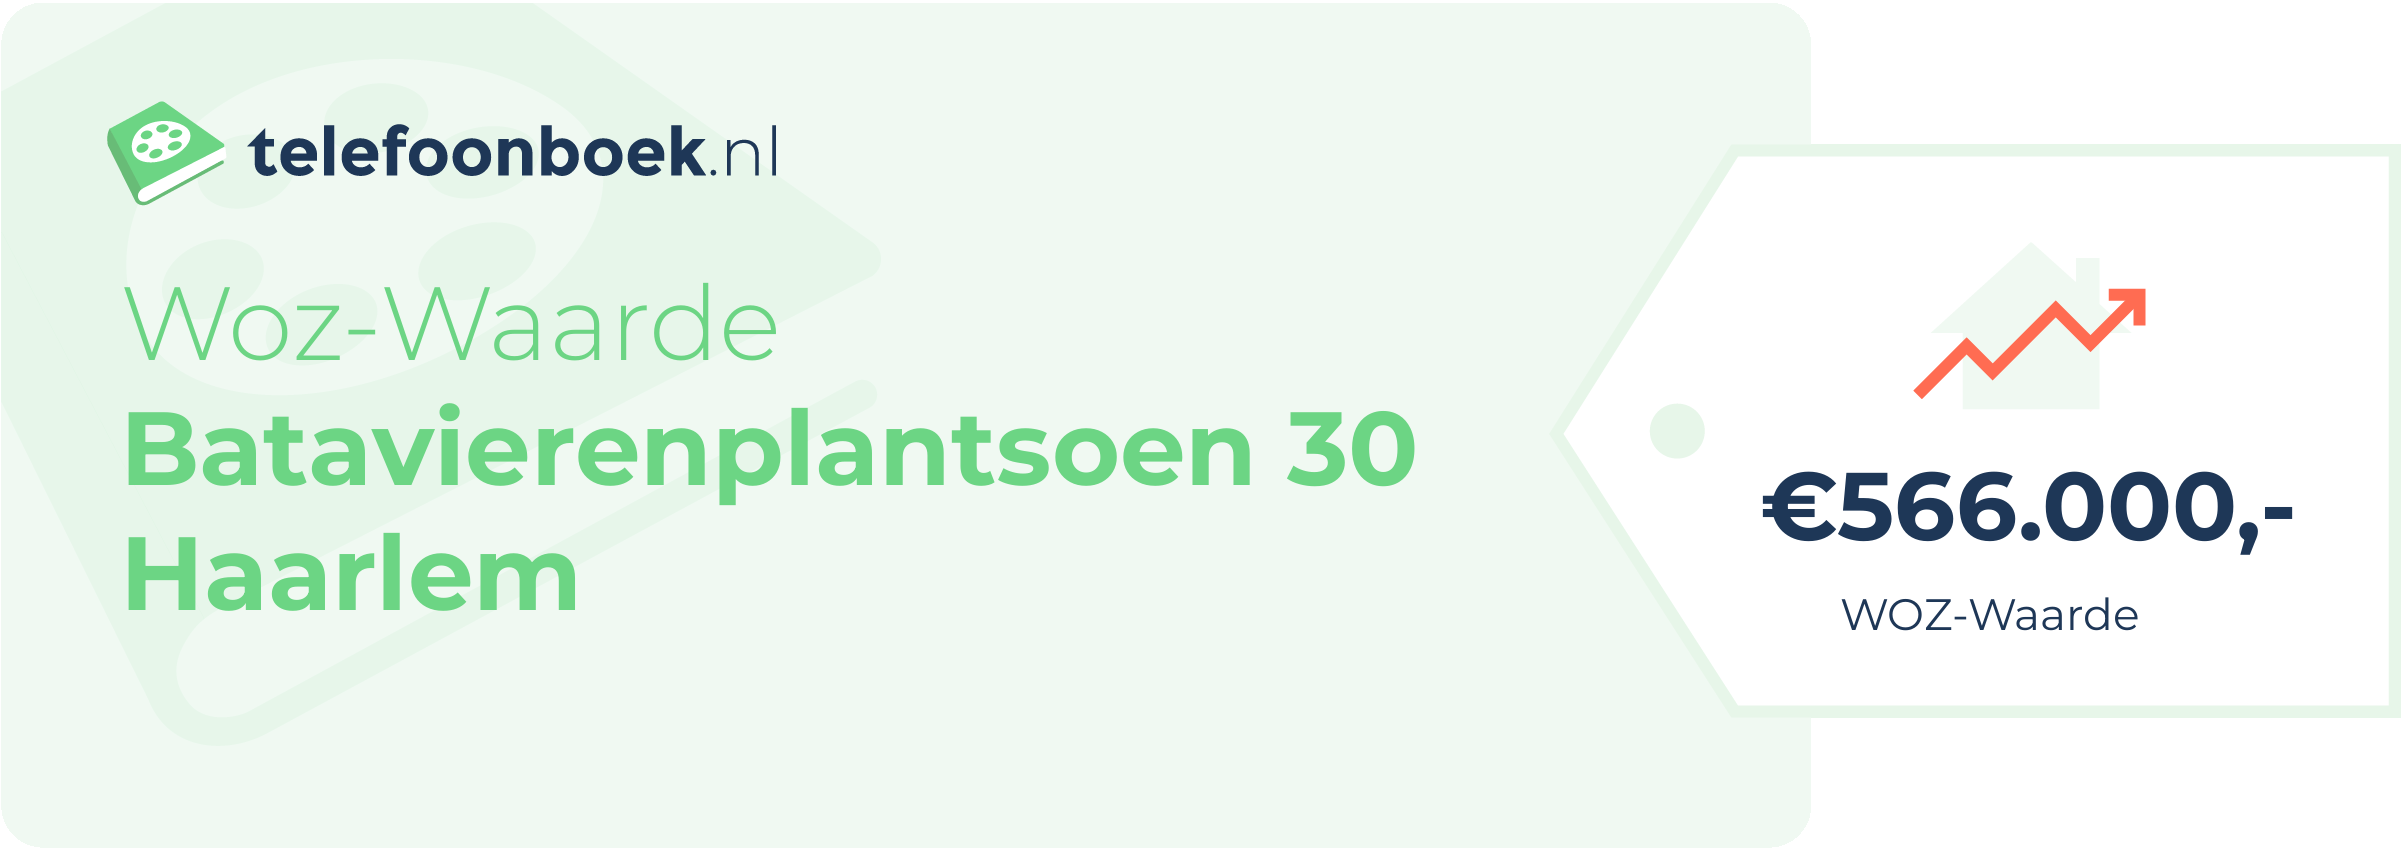 WOZ-waarde Batavierenplantsoen 30 Haarlem